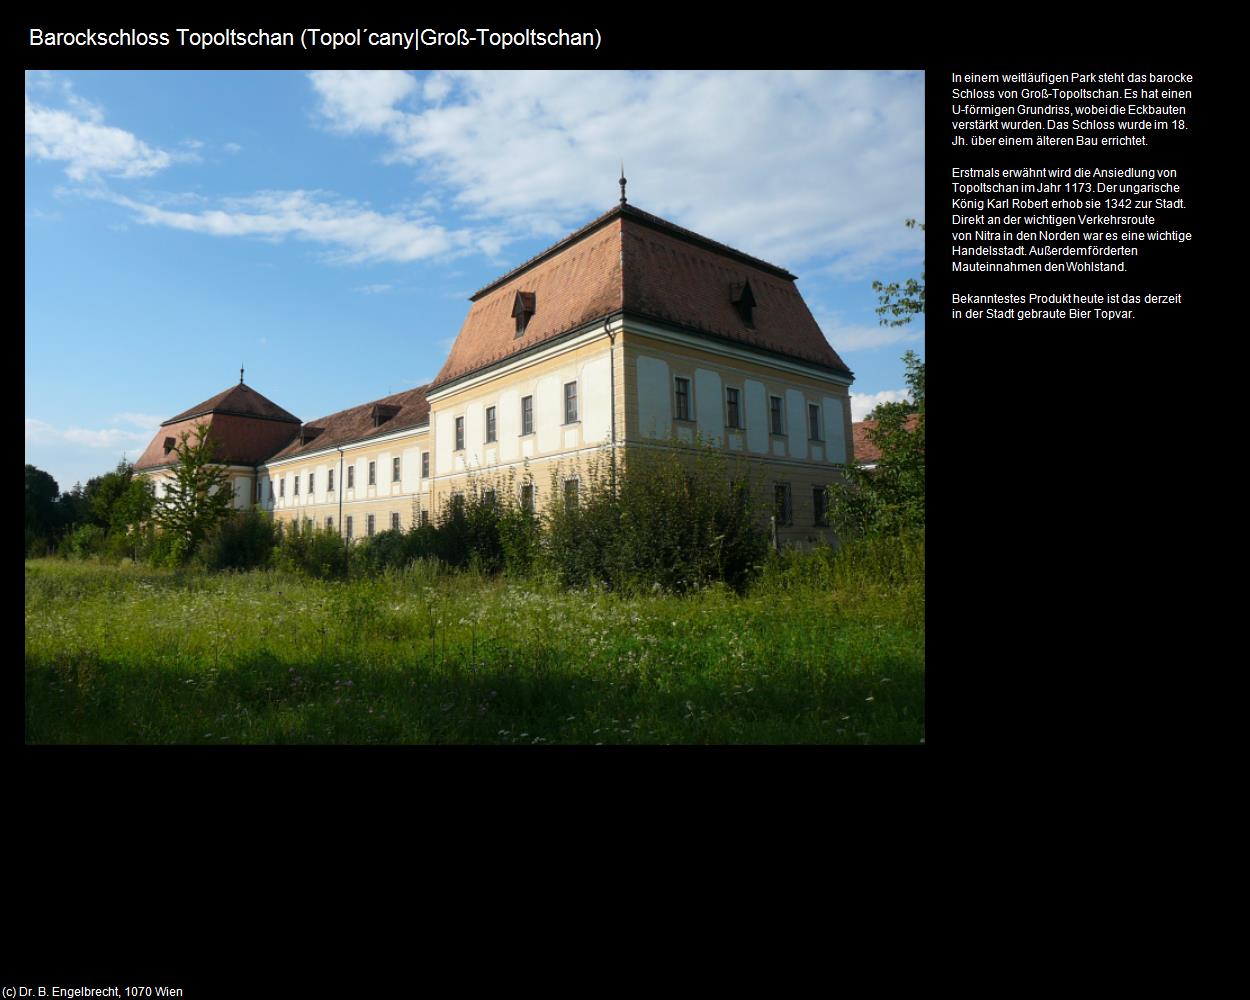 Barockschloss Topoltschan (Topol‘cany|Groß-Topoltschan) in SLOWAKEI